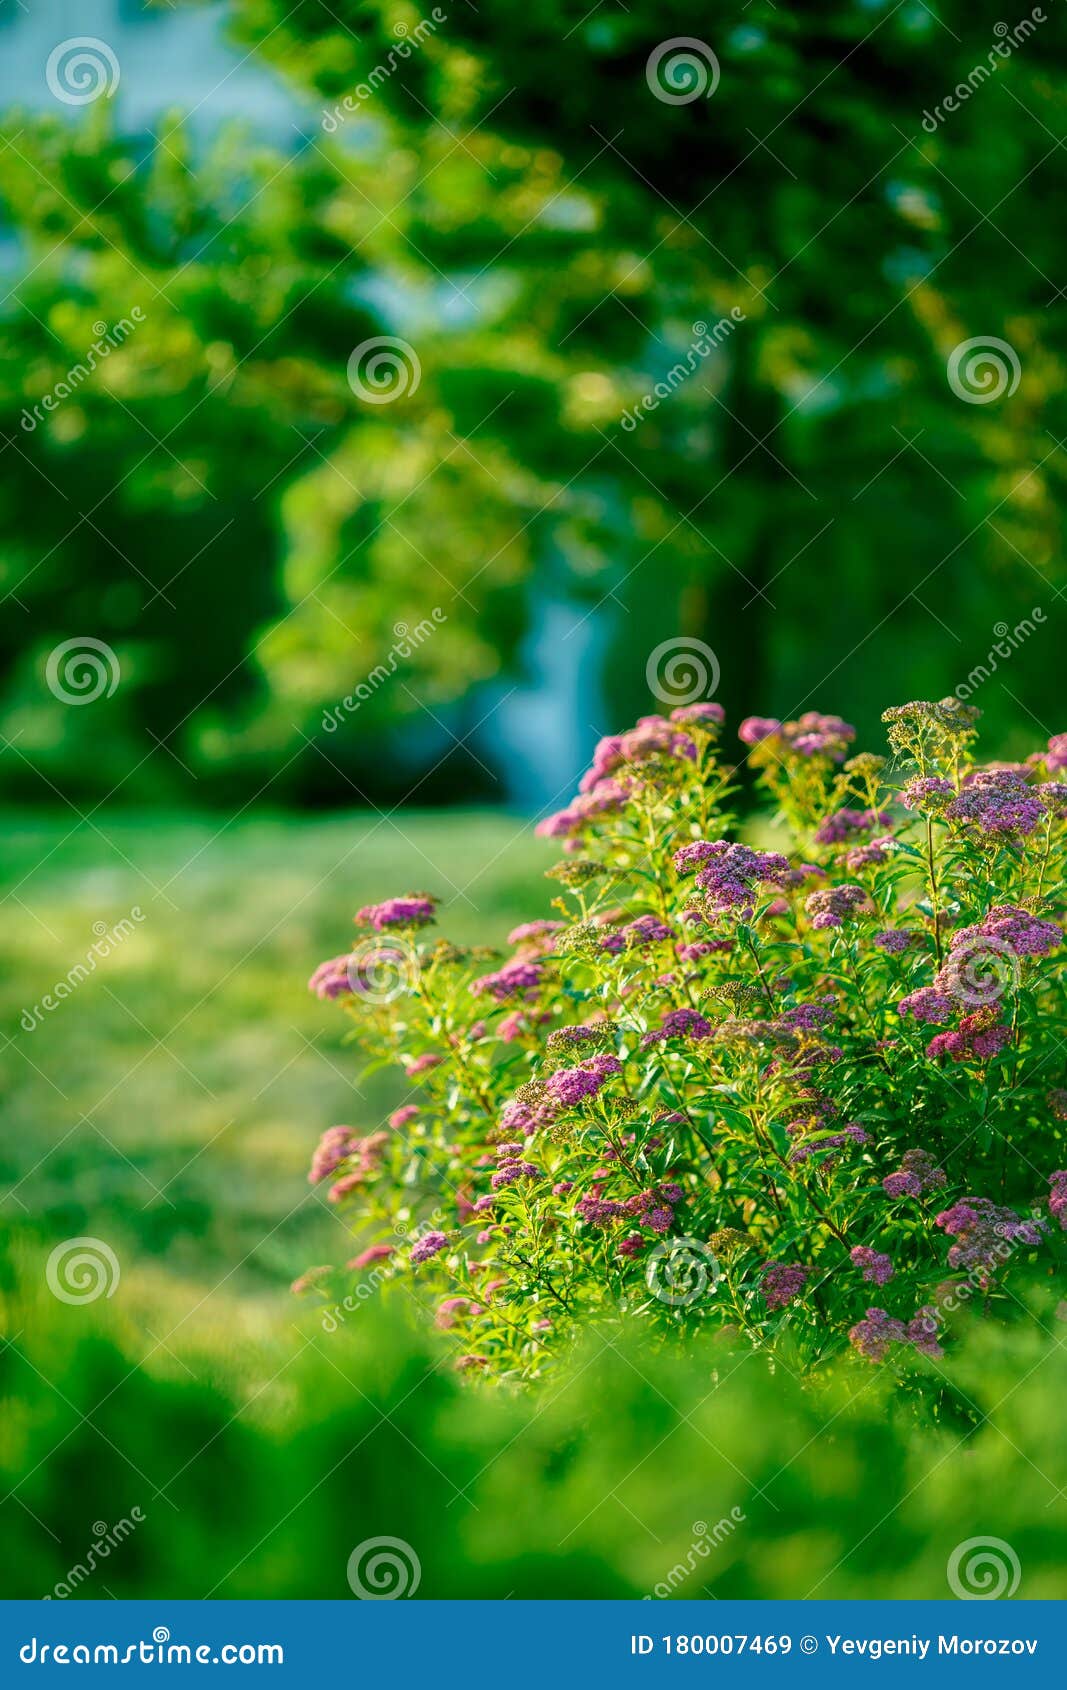 Blurred Park, Natural Background Stock Image - Image of natural, background:  180007469